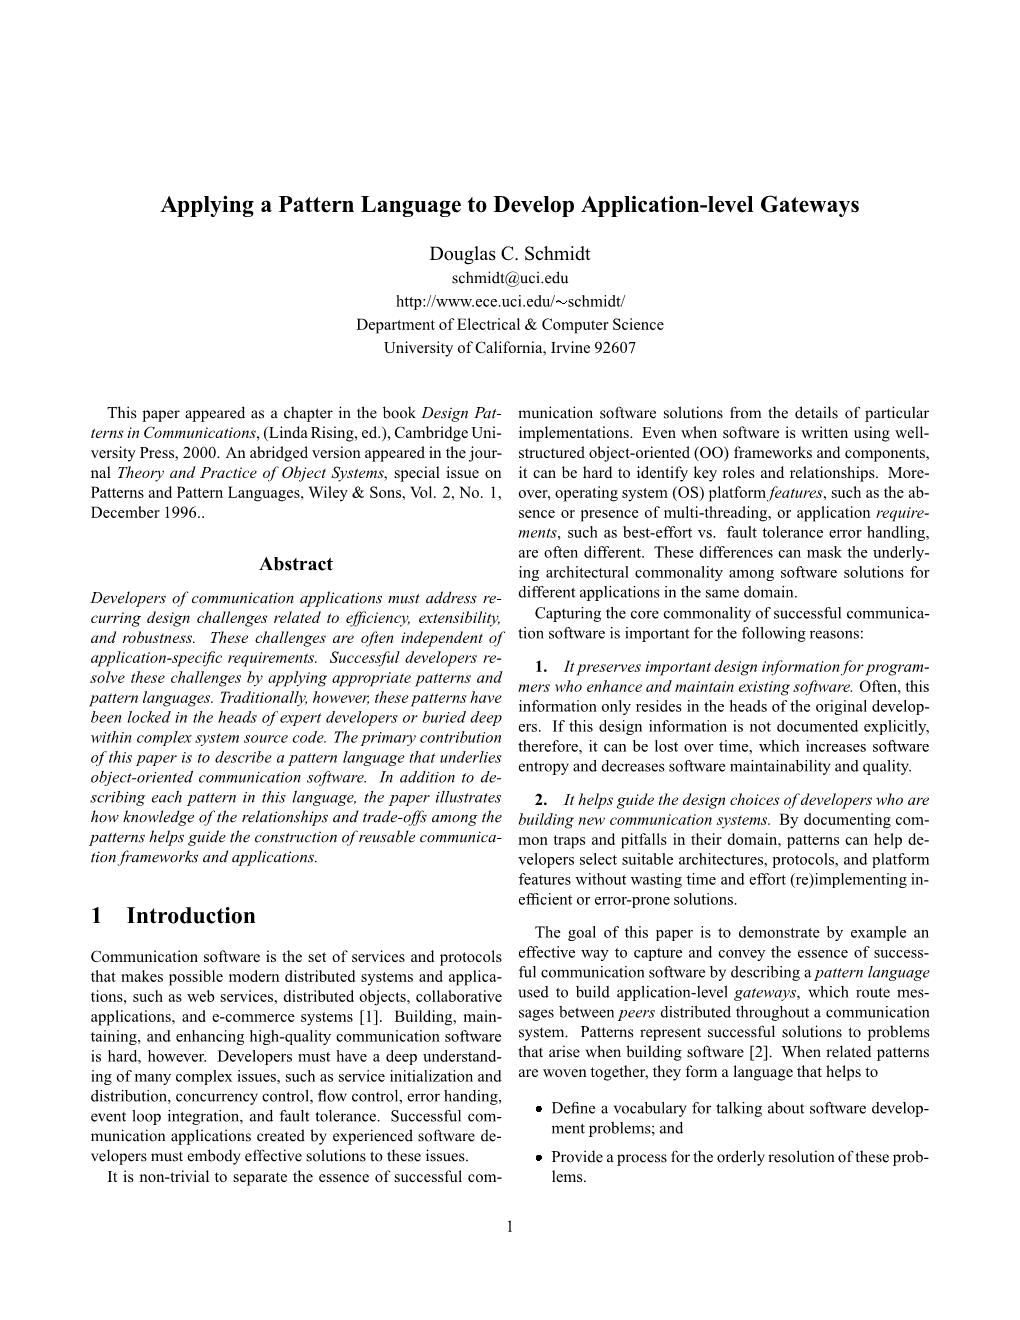 Applying a Pattern Language to Develop Application-Level Gateways